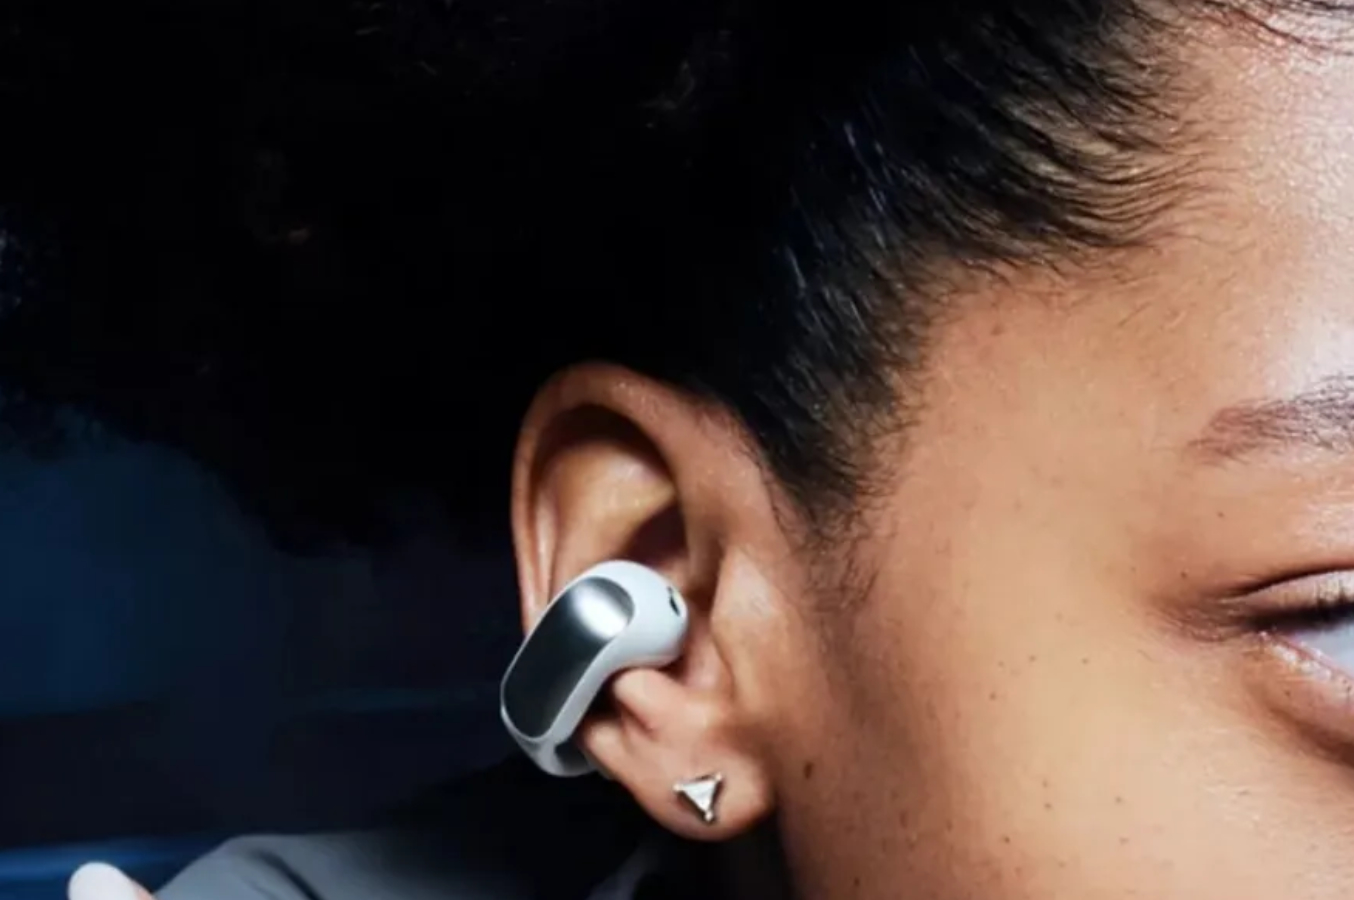 Bose QuietComfort Ultra leak showcases new flagship ANC headphones -   News